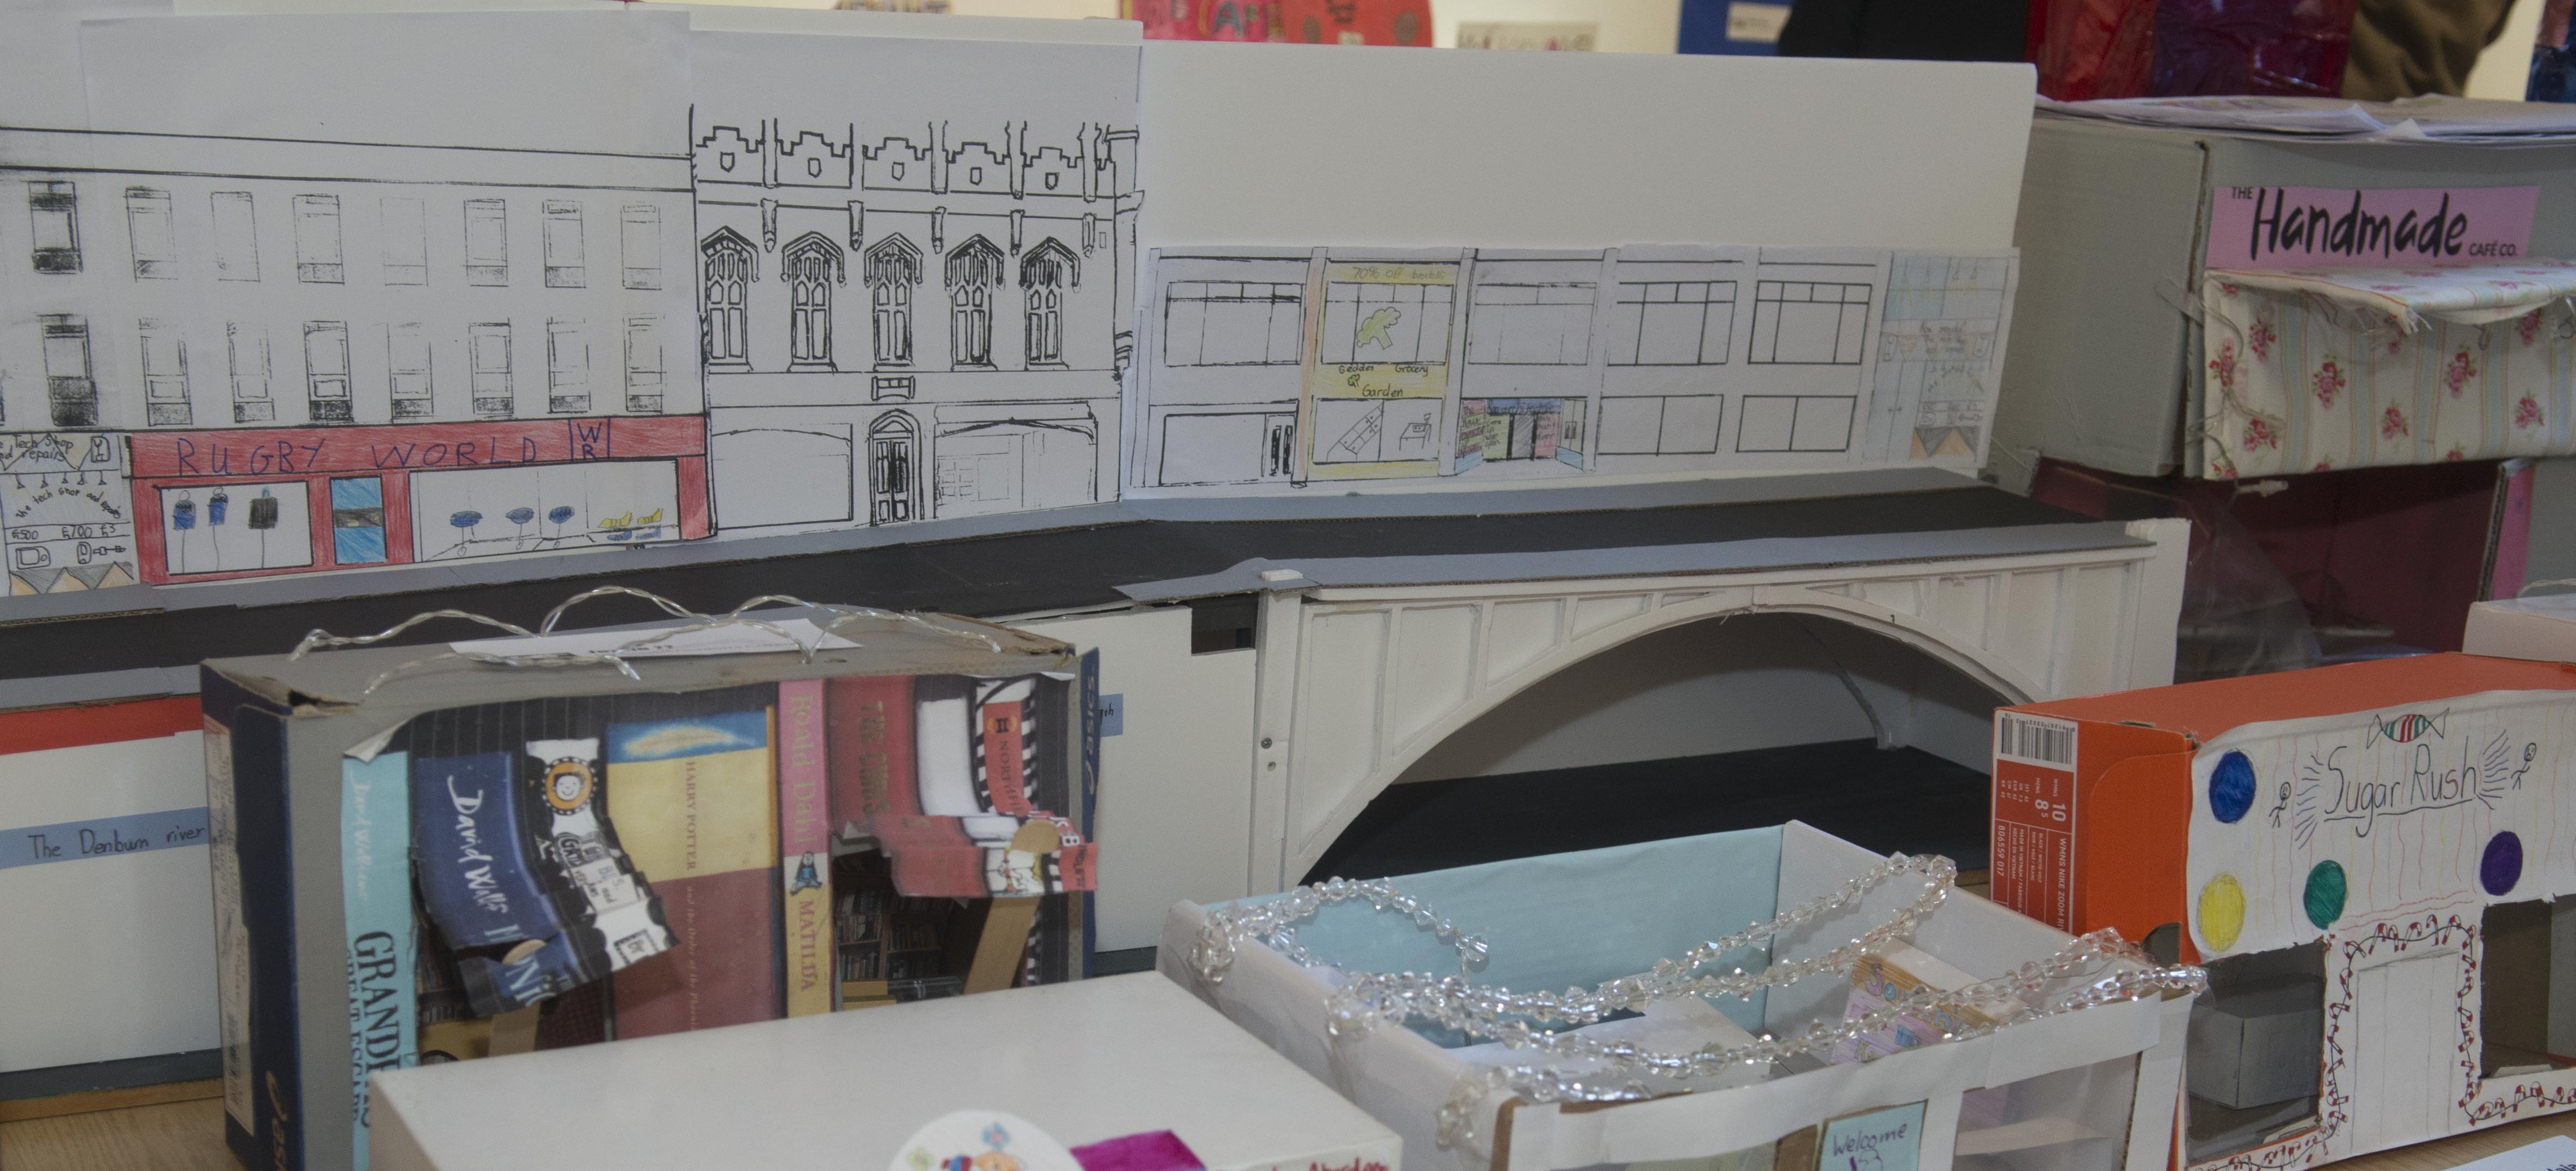 04/12/18 City centre masterplan shoebox shop design competition by local school pupils